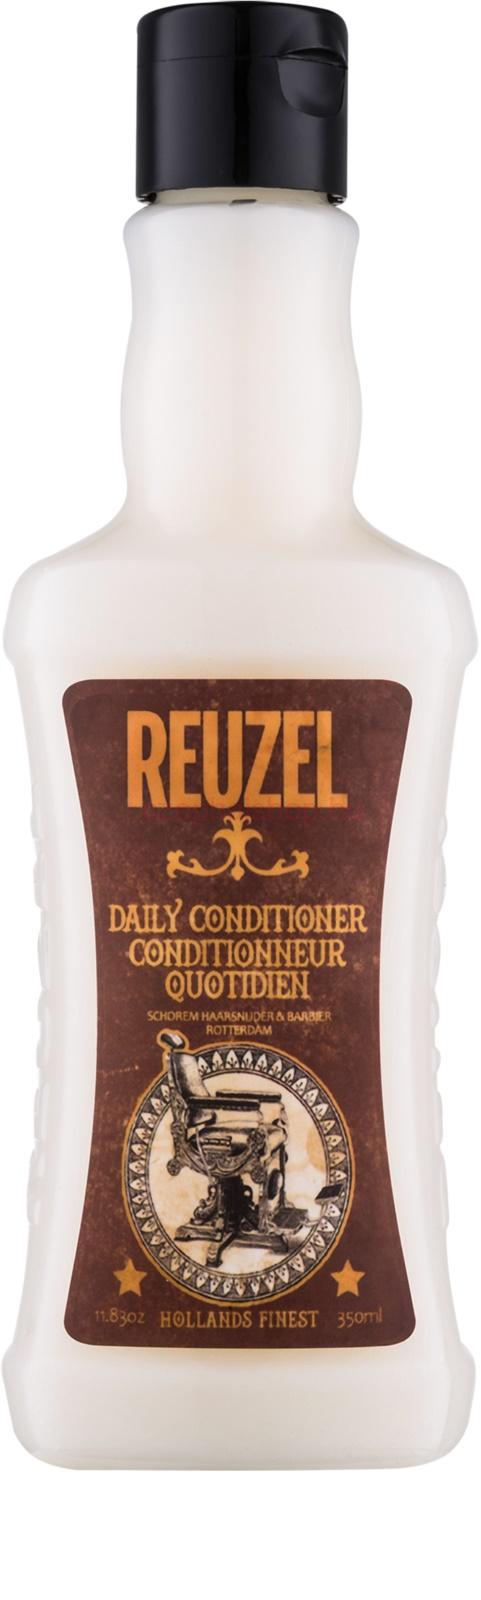 REUZEL Daily Conditioner 350 ml